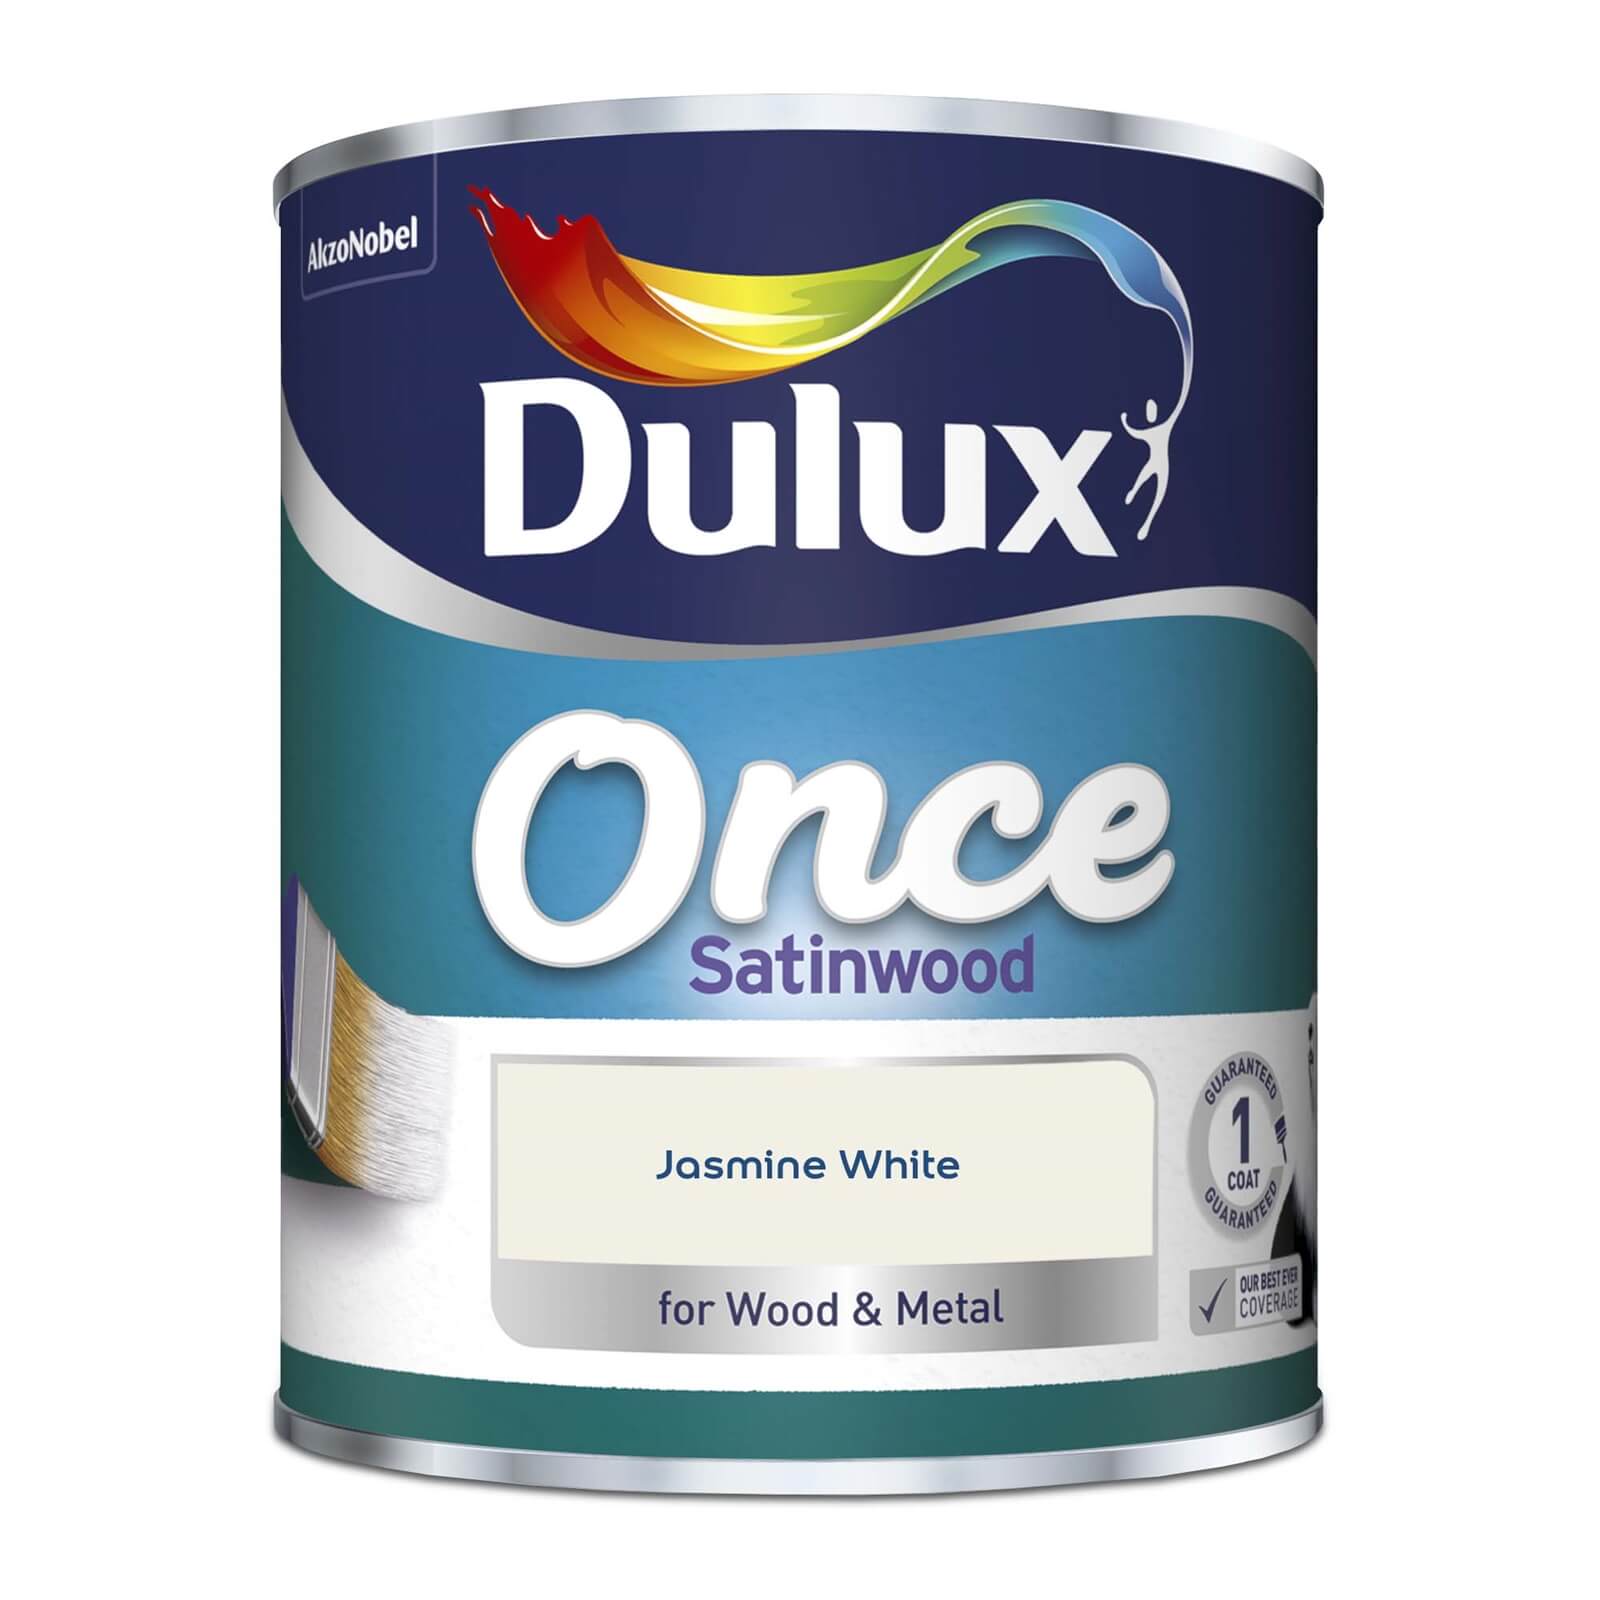 Dulux Once Satinwood Paint  Jasmine White - 750ml